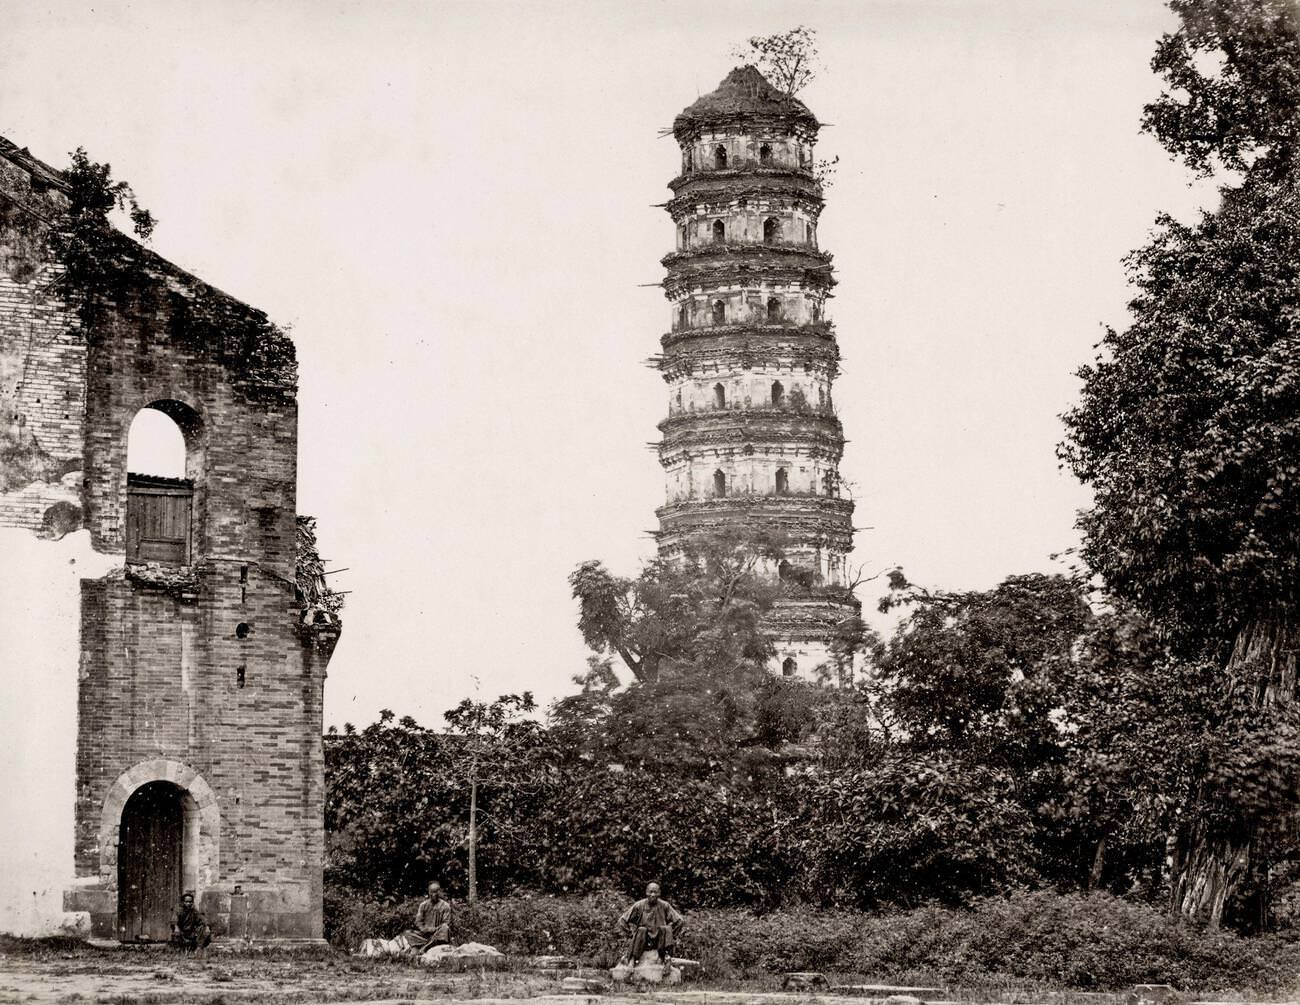 Pagoda and ruins in Canton, Guangzhou, China, 1860s